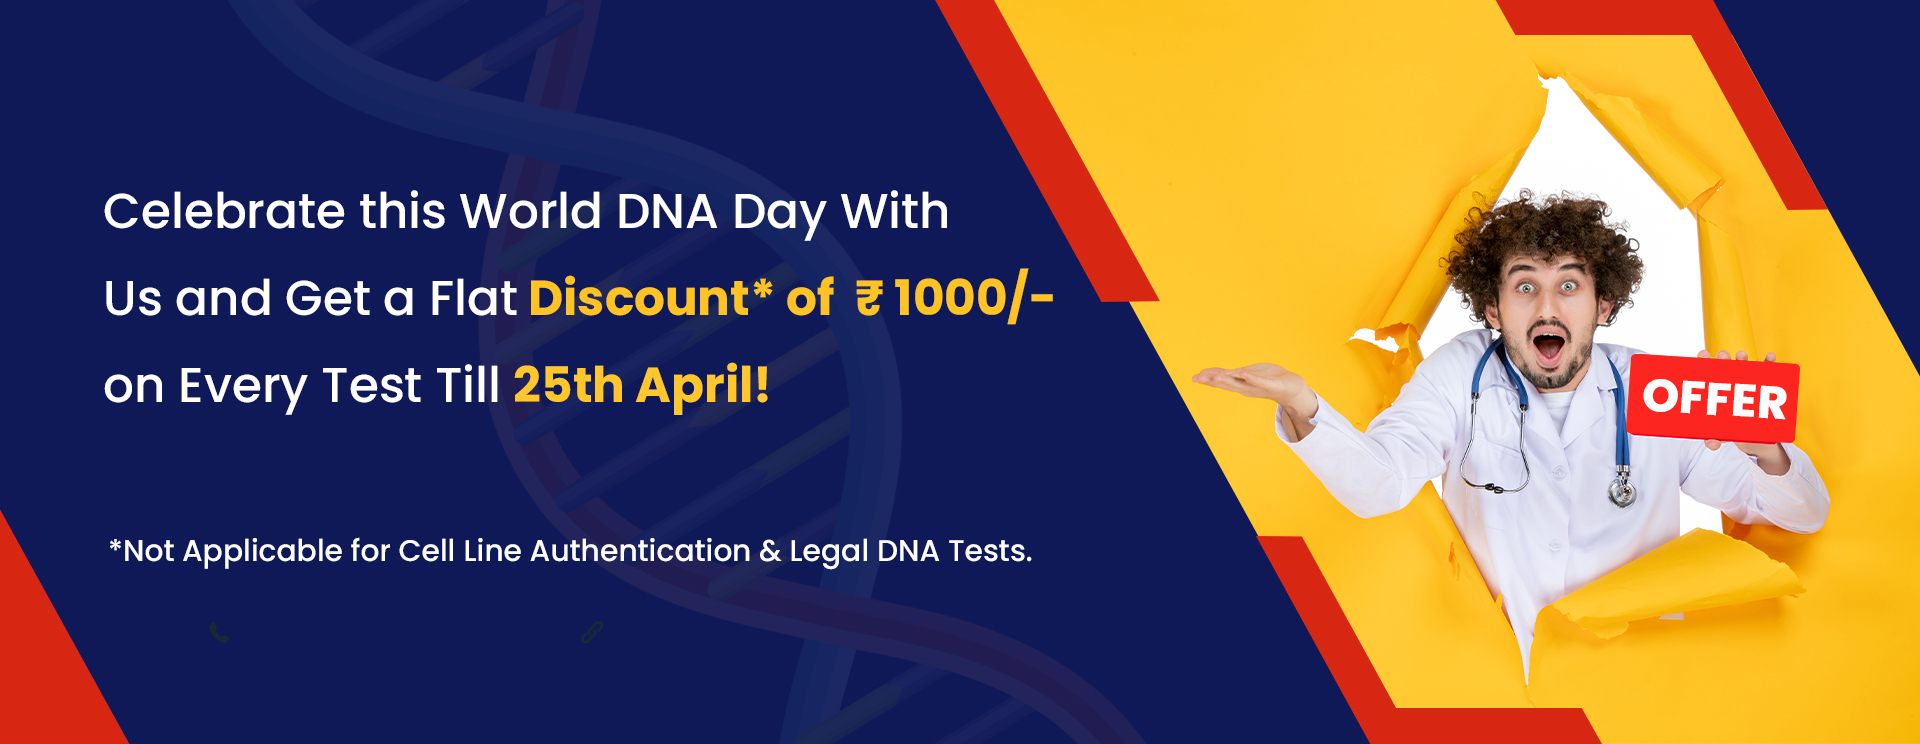 DNA Day Offer